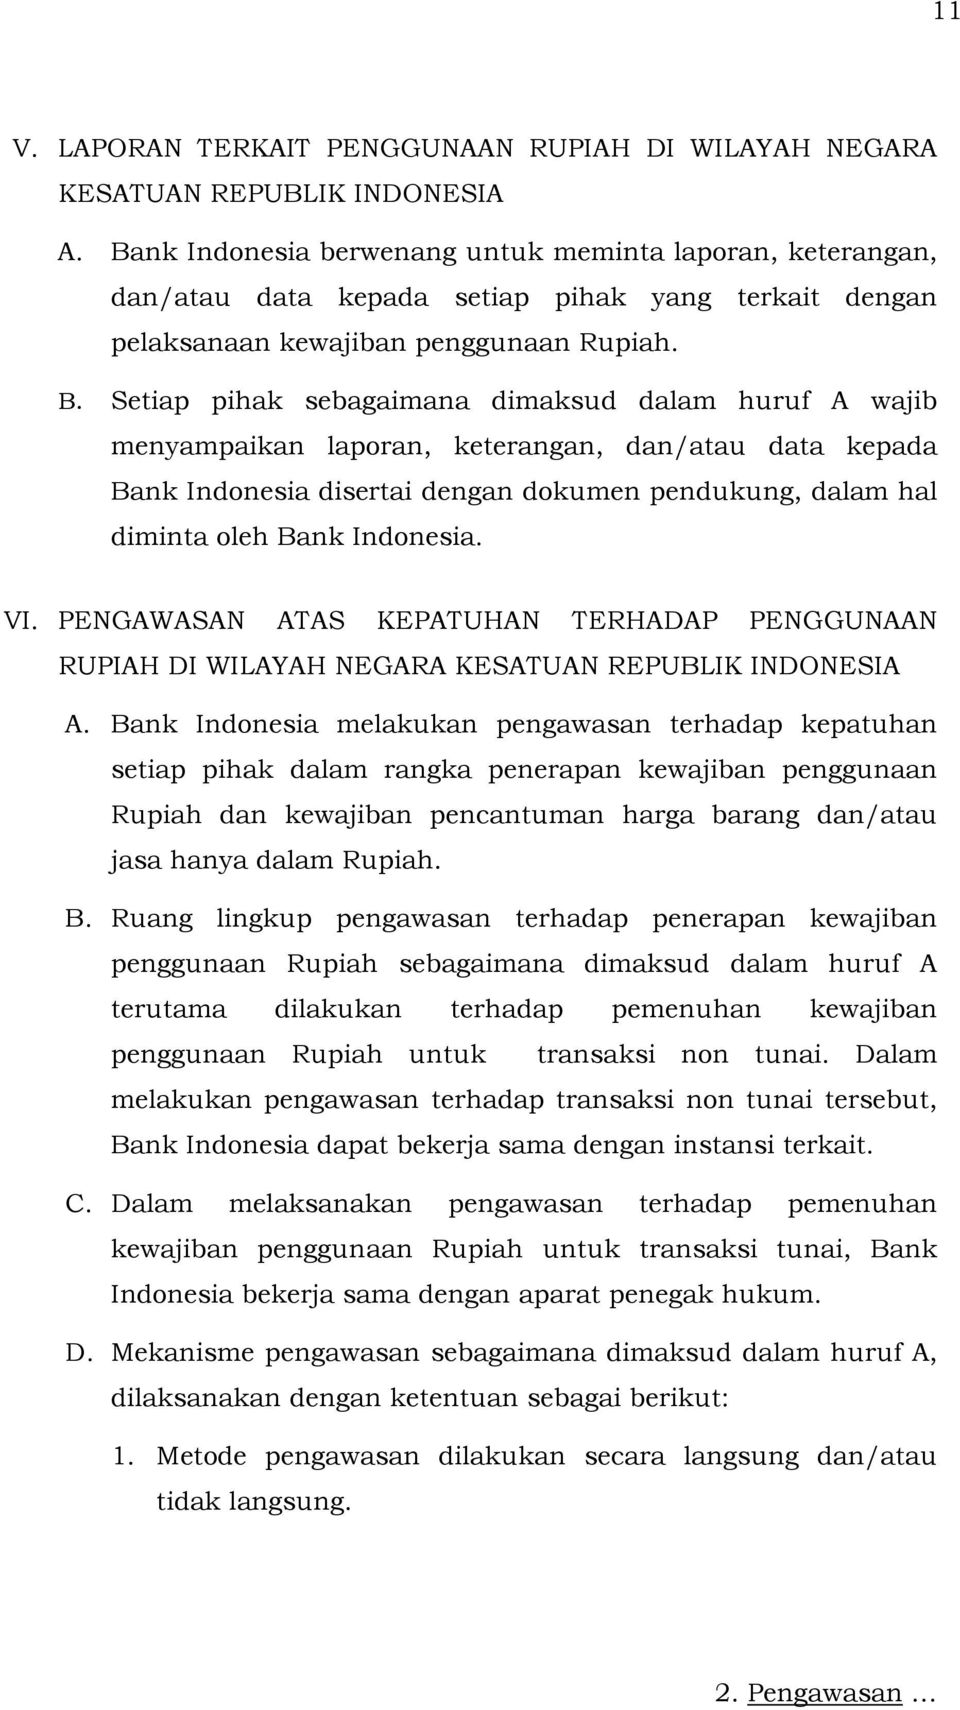 Setiap pihak sebagaimana dimaksud dalam huruf A wajib menyampaikan laporan, keterangan, dan/atau data kepada Bank Indonesia disertai dengan dokumen pendukung, dalam hal diminta oleh Bank Indonesia.